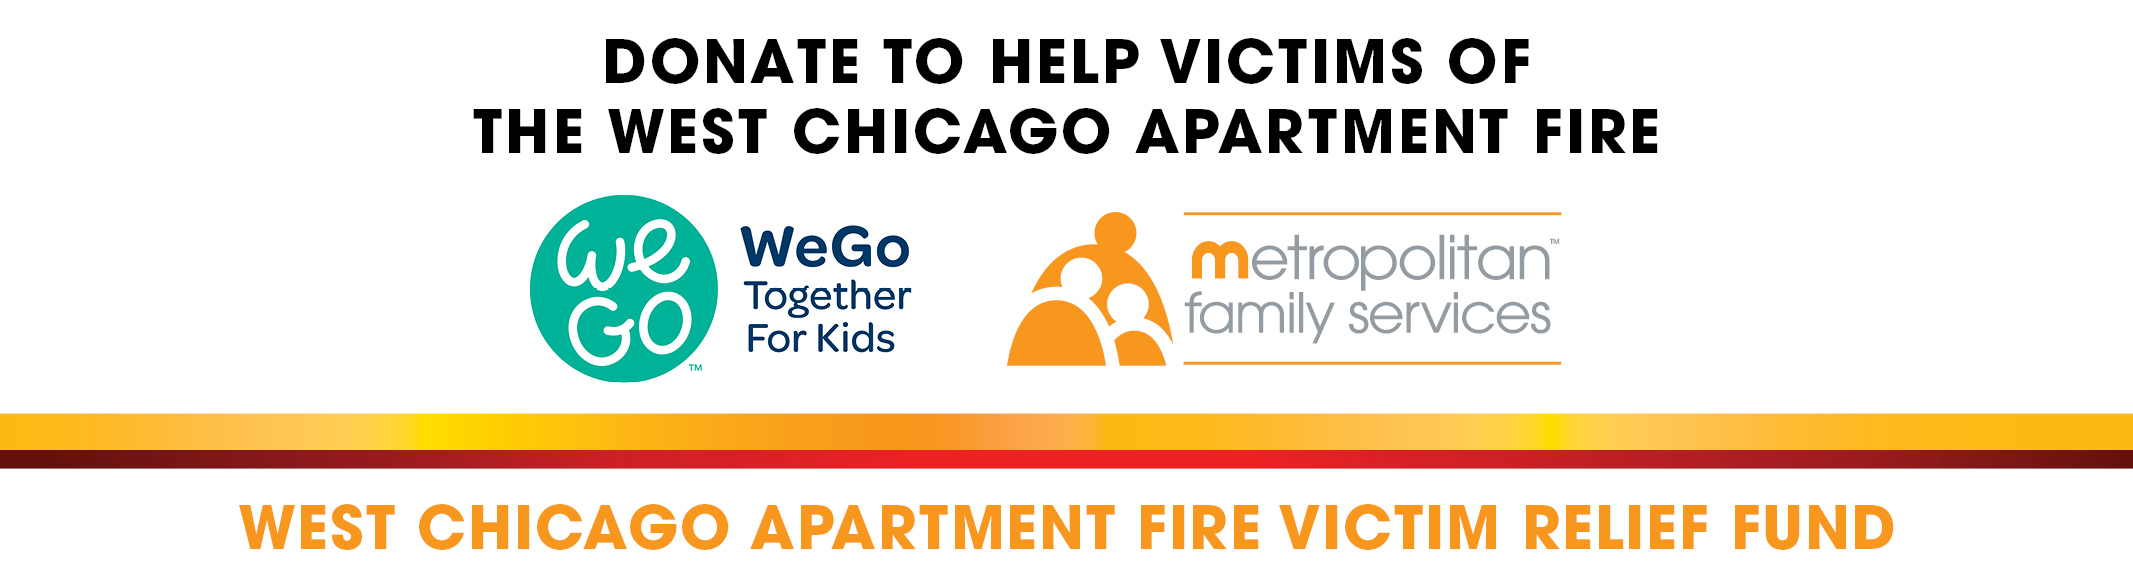 MKG_23_016_Victims_West_Chicago_Apartment_Fire _v1r02.jpg